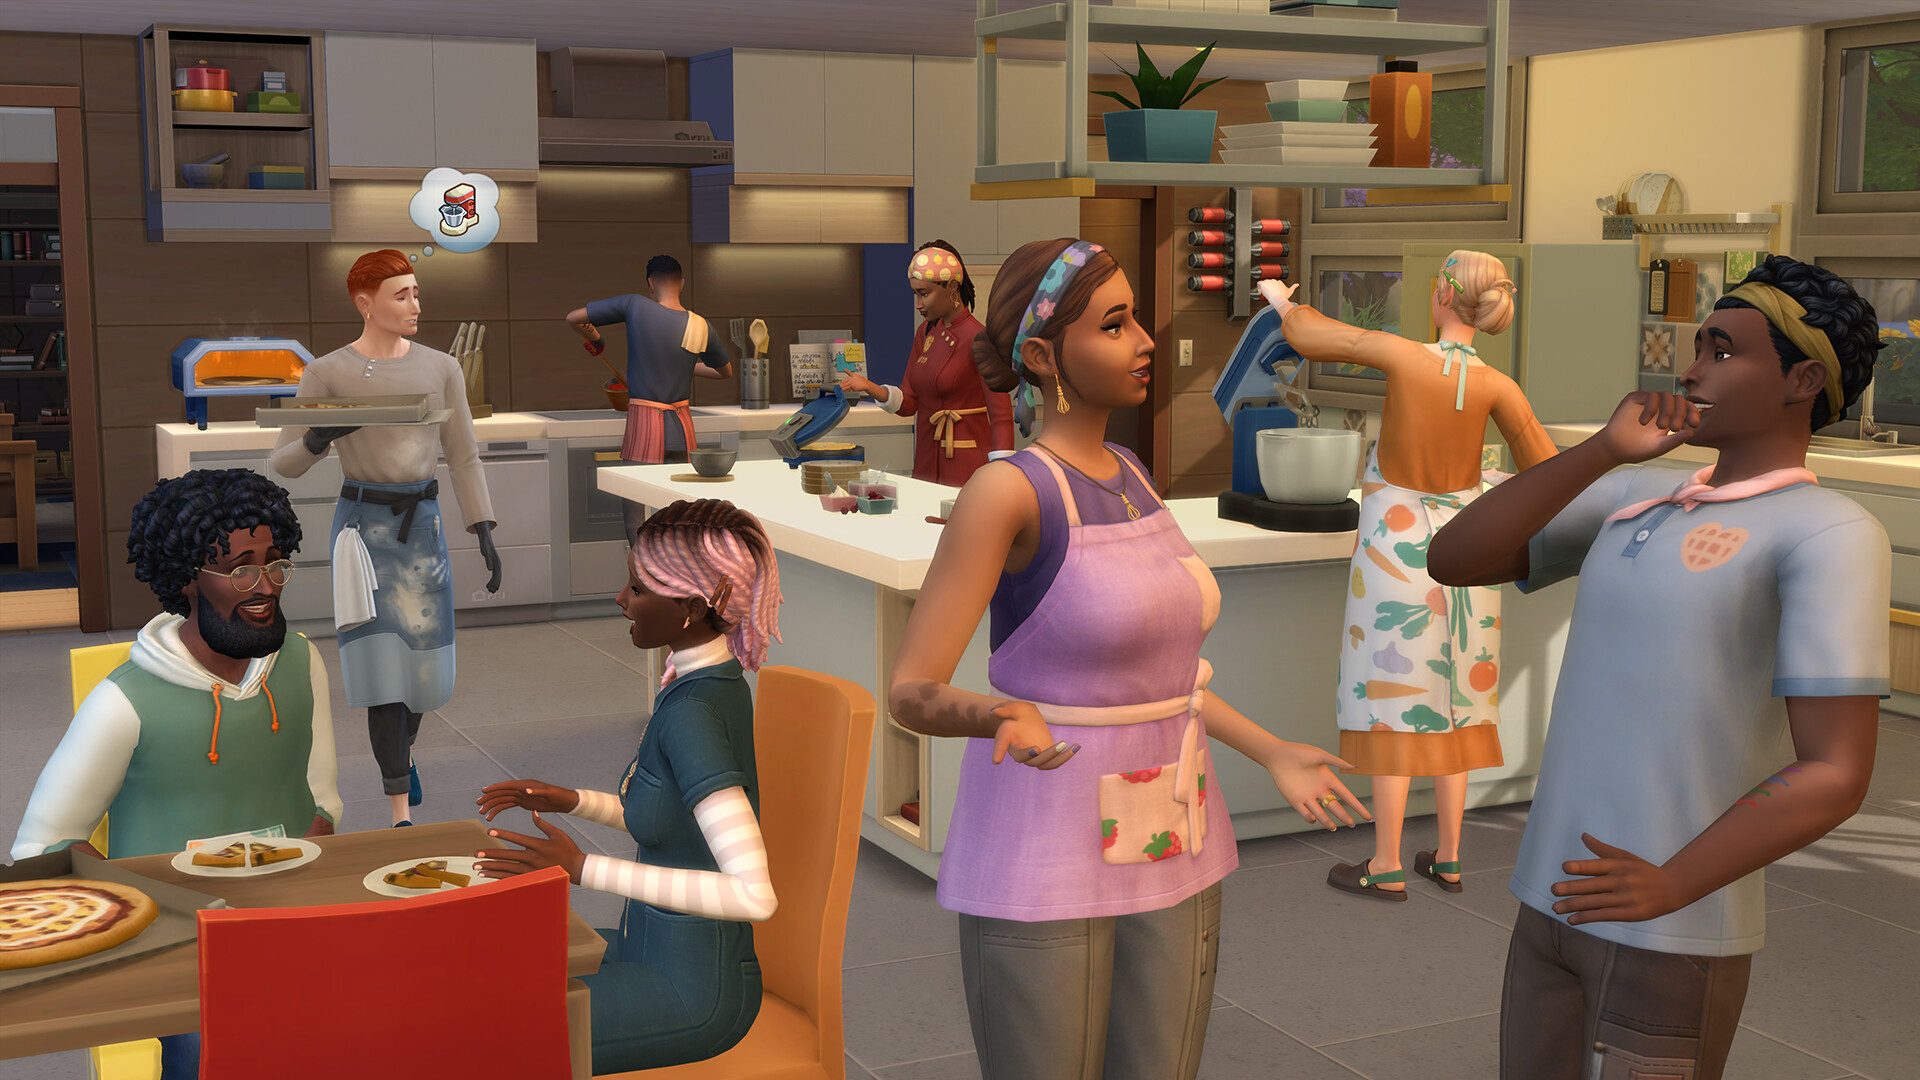 The Sims 4 - Home Chef Hustle Stuff Pack Origin CD Key 10.03 usd